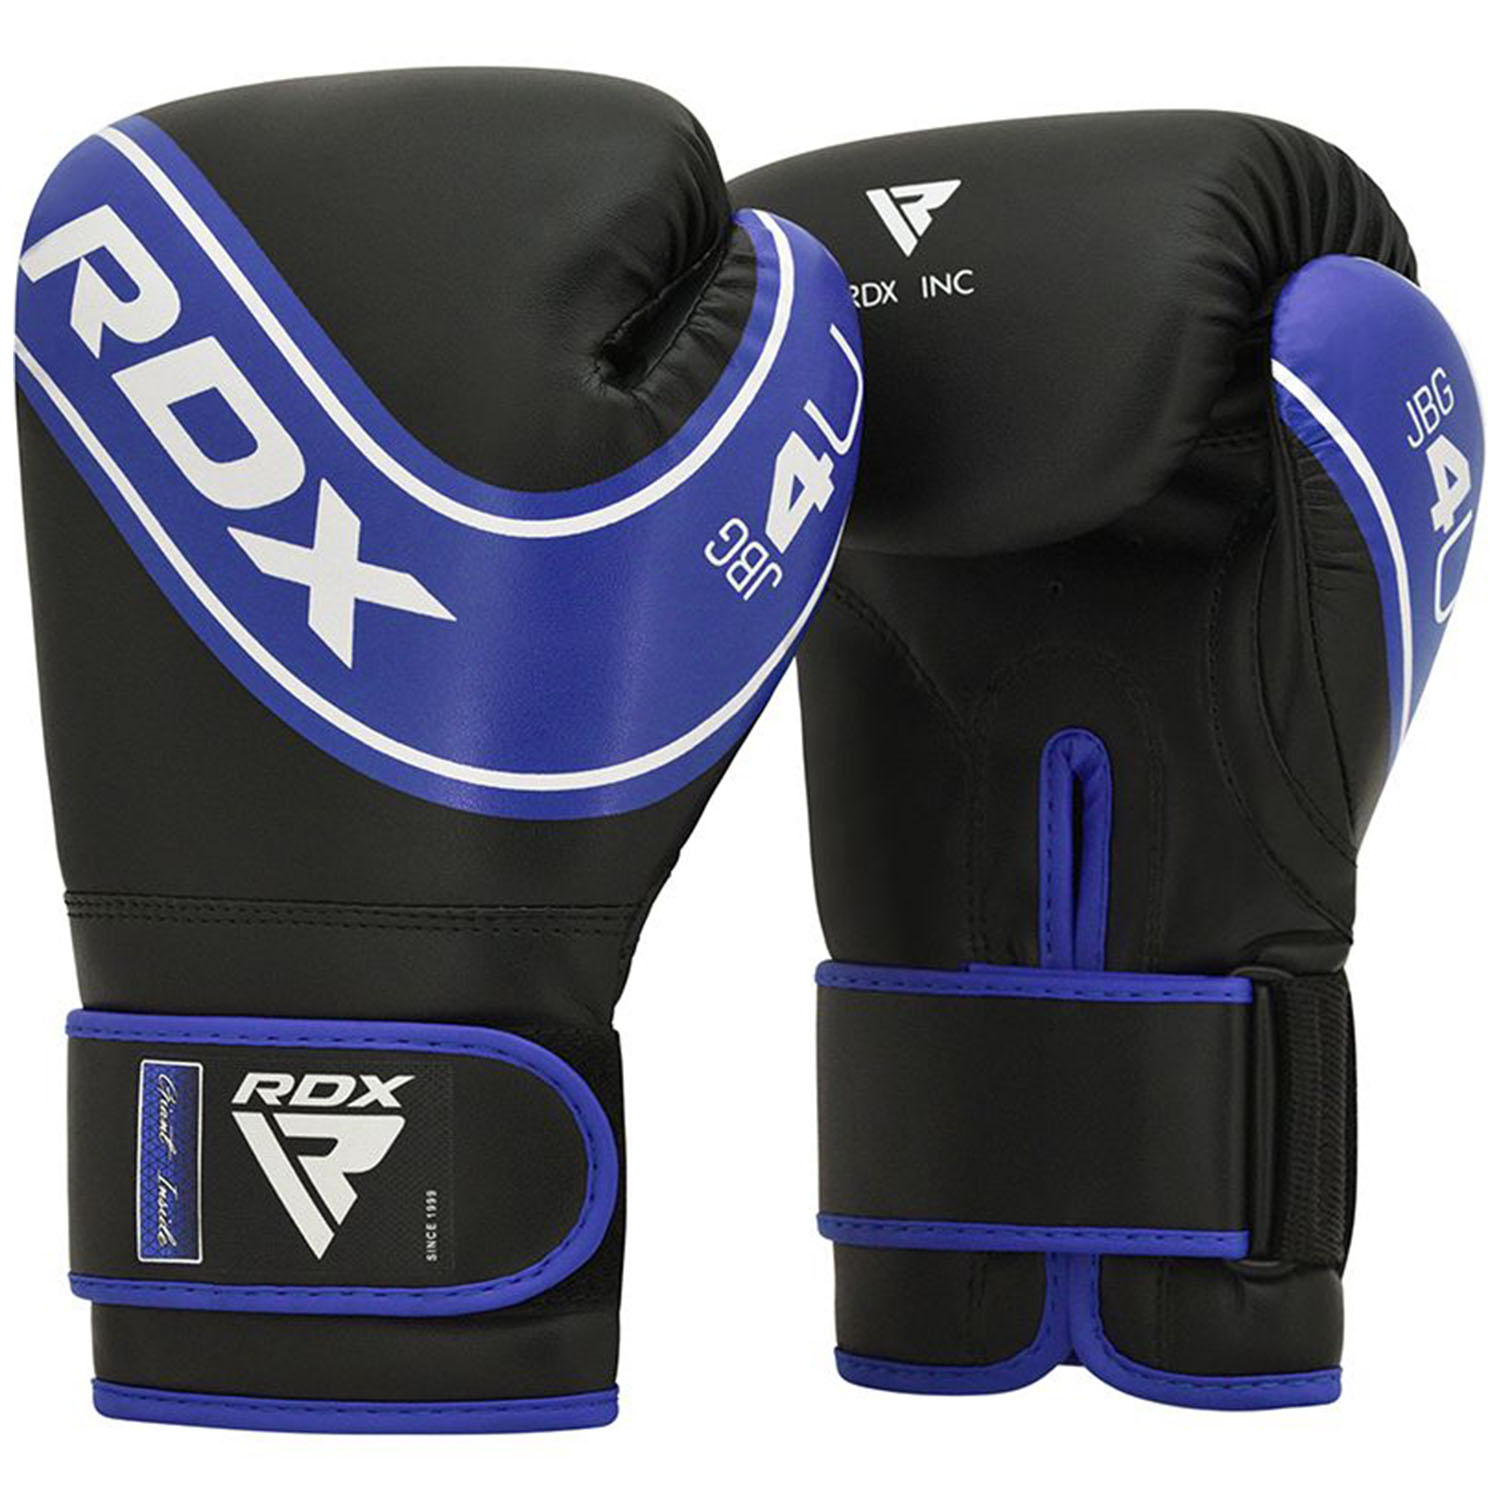 RDX Boxing Gloves, Kinder, 4B, black-blue, 4 Oz